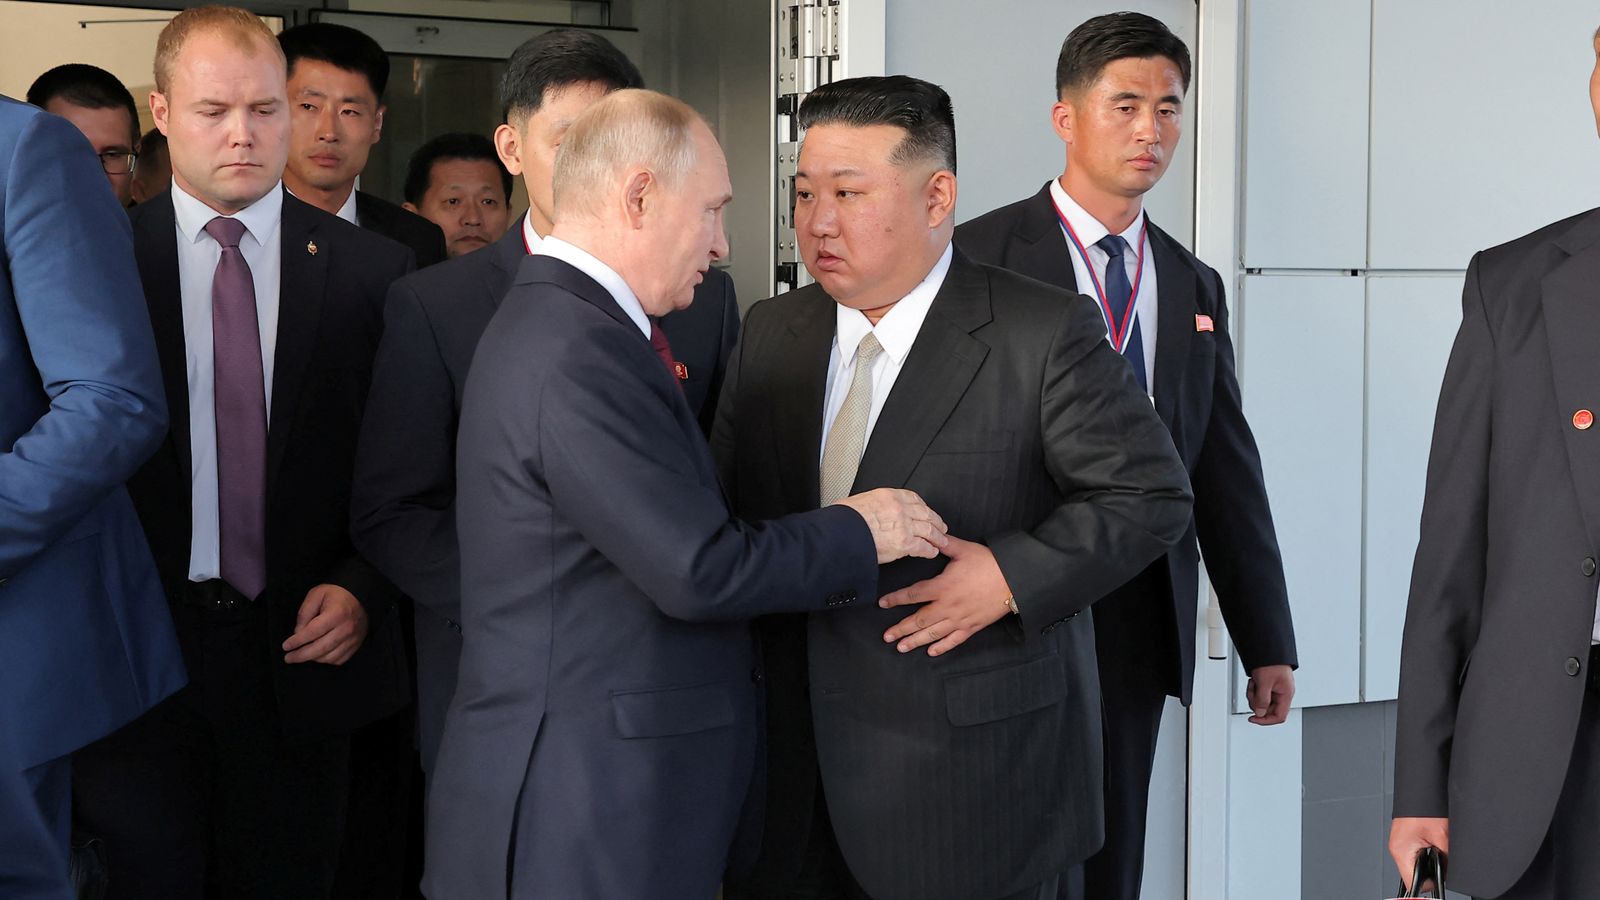 Putin 'accepts' Kim's invitation to visit North Korea, report claims